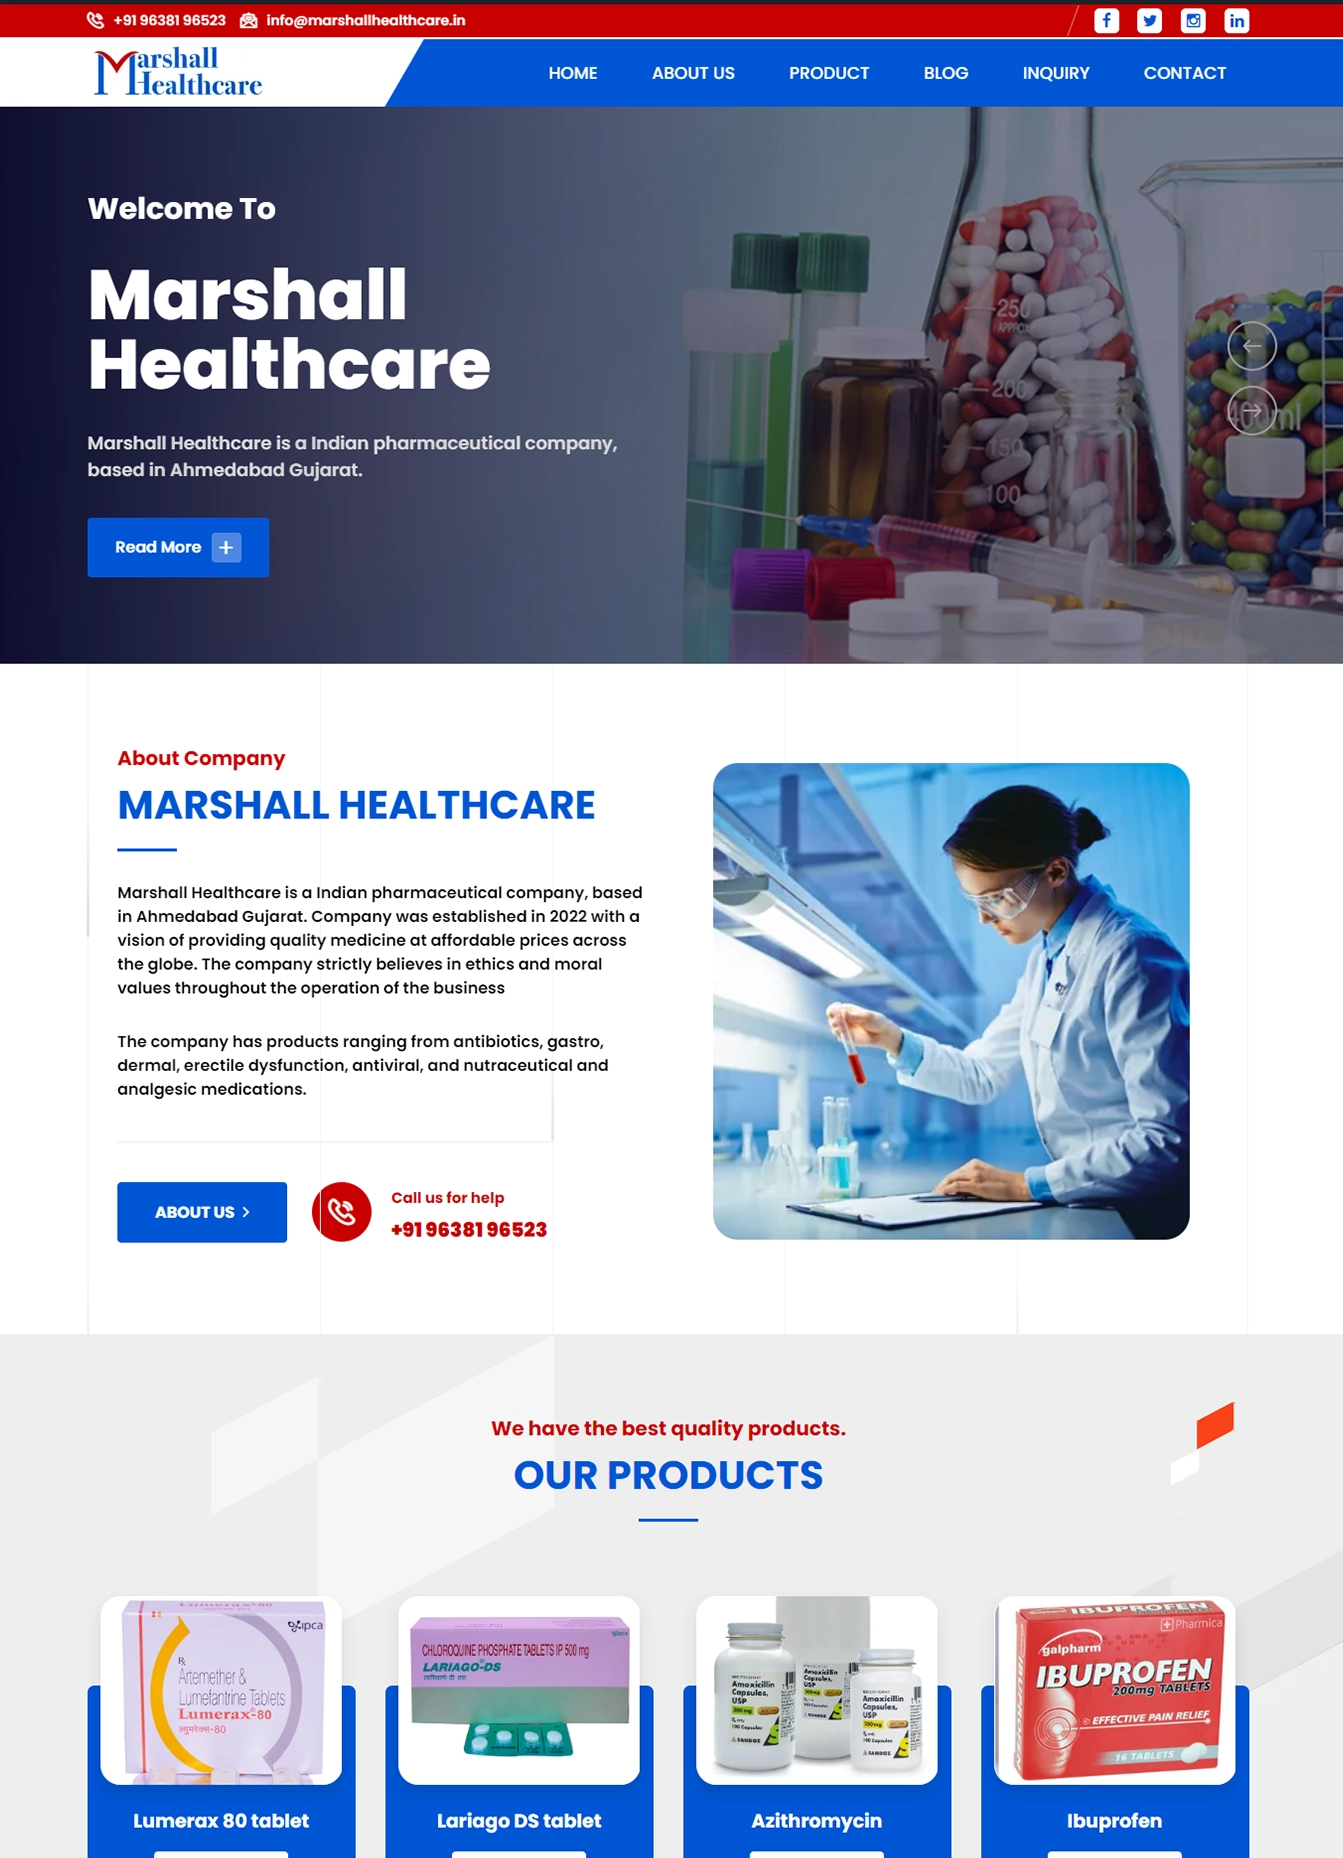 Marshall Healthcare